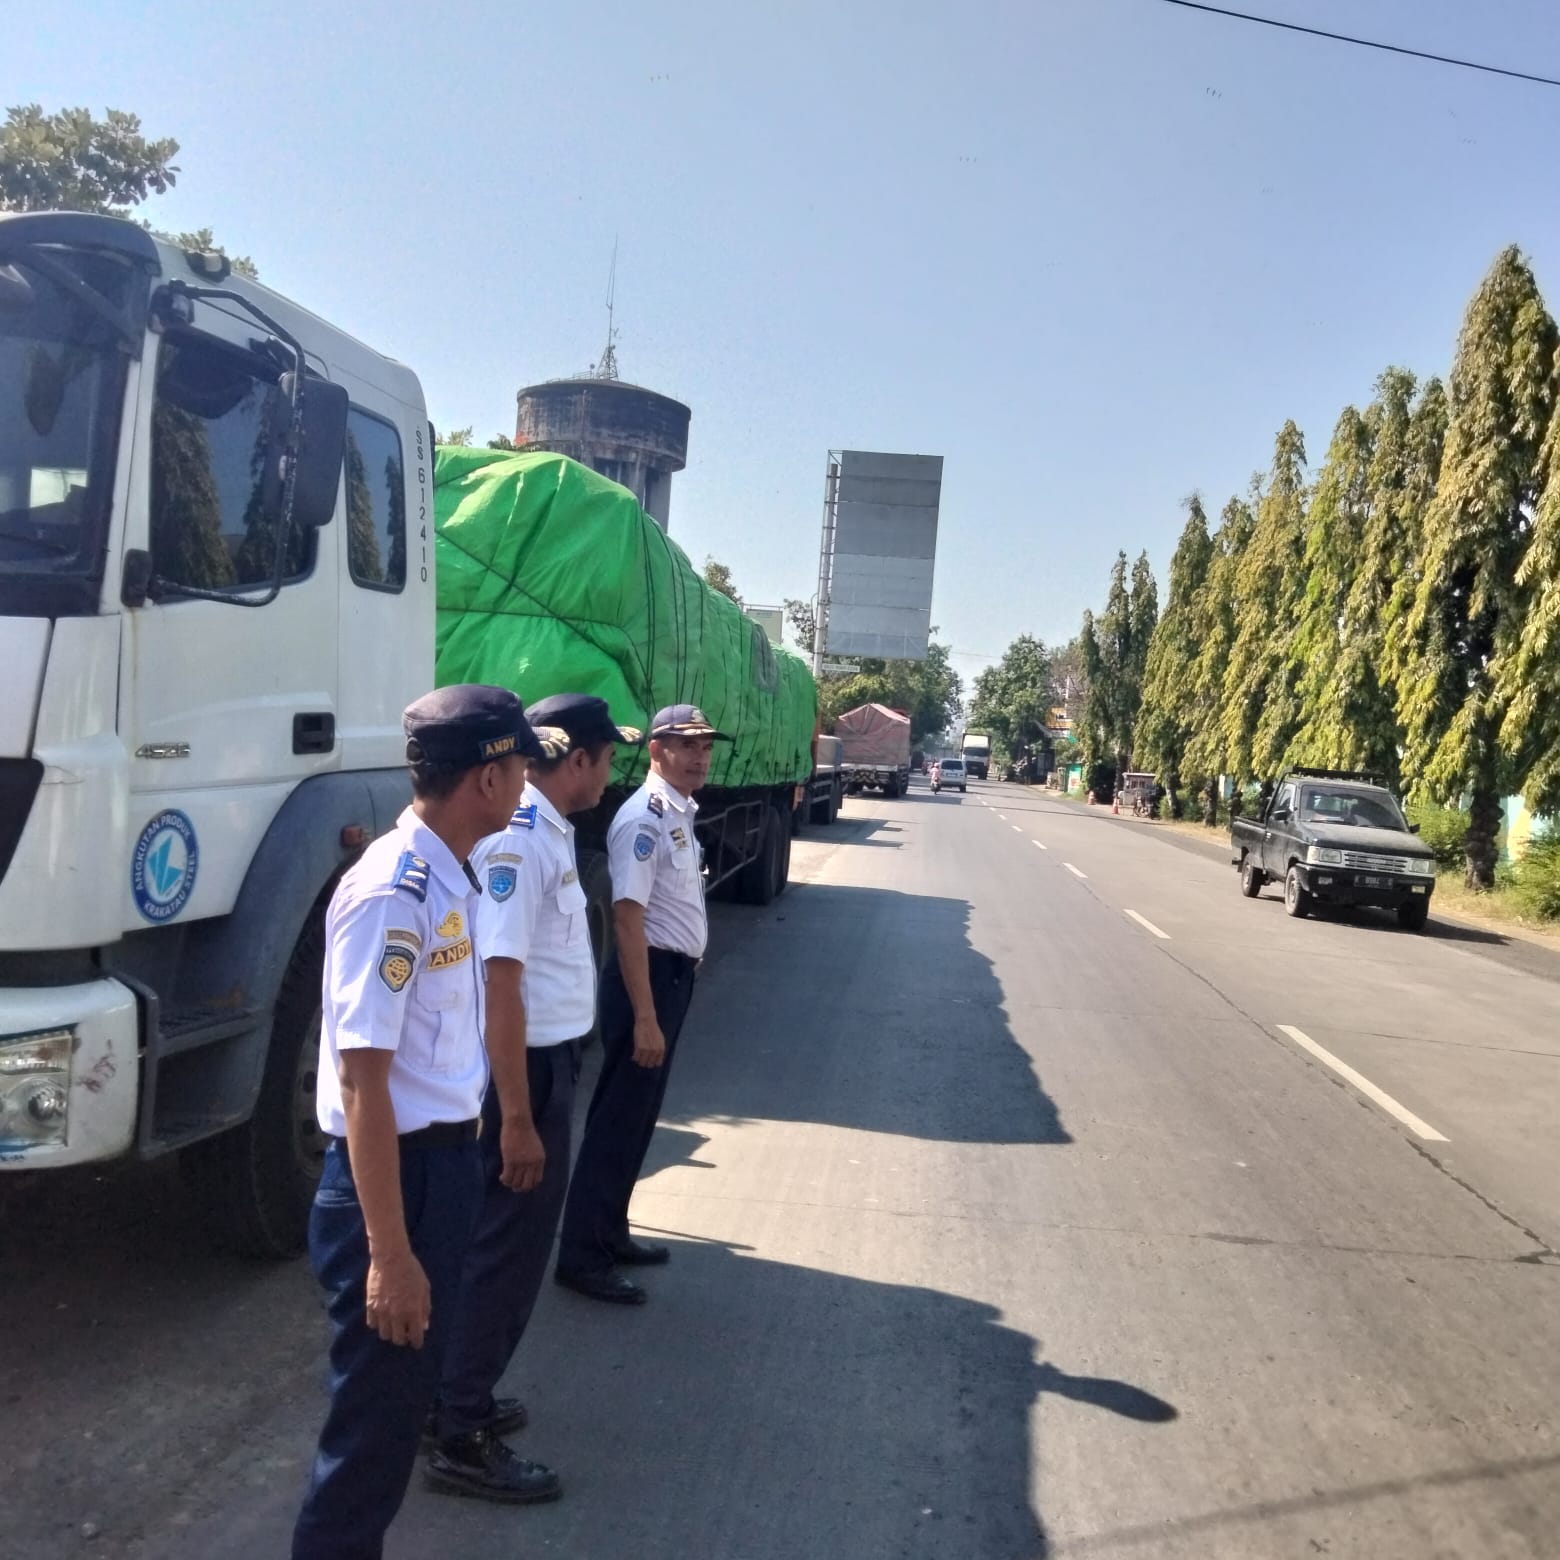 Dinas Perhubungan (Dishub) Kabupaten Pati melakukan monitoring terhadap kendaraan besar yang parkir sembarangan di sepanjang jalan (Jurnalindo.com)